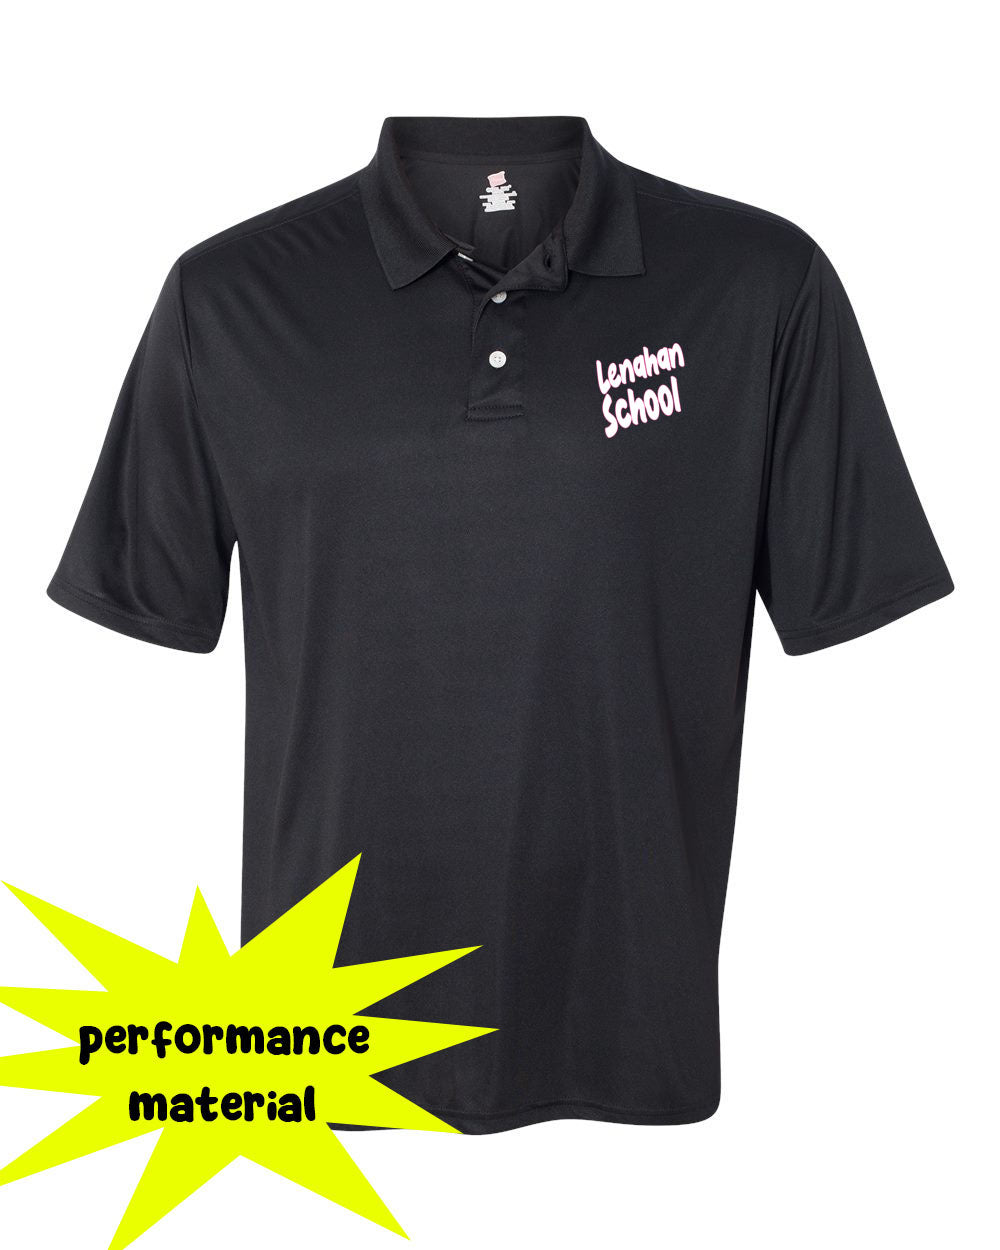 Lenahan Dance Design 5 Performance Material Polo T-Shirt